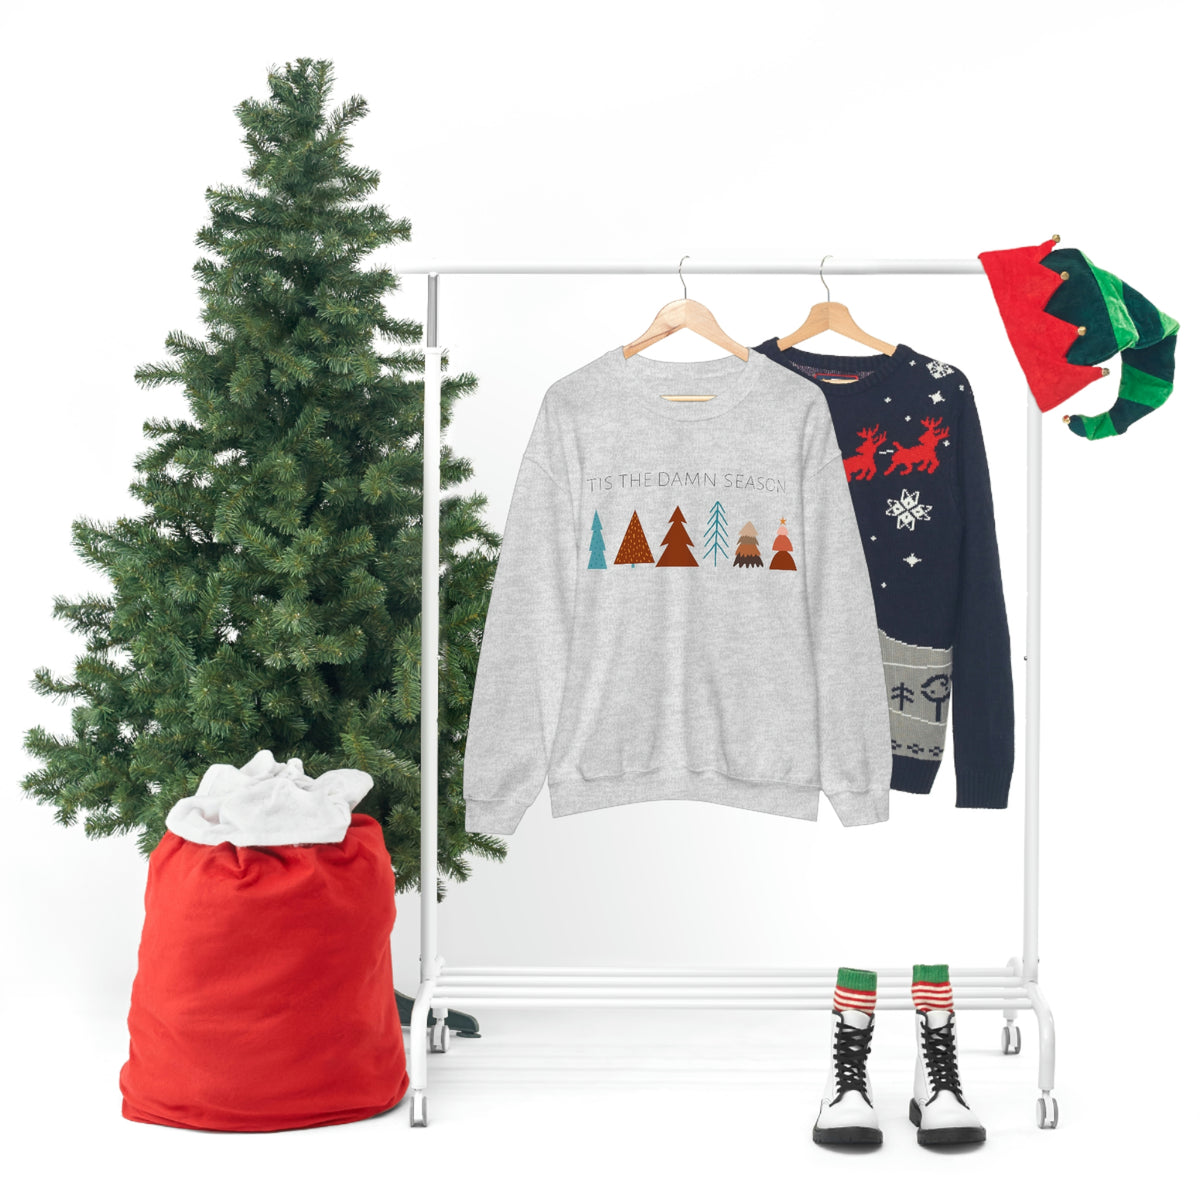 Taylor Swift Crewneck, Swifties, Christmas Oversized Comfy Holiday Sweatshirt, Tis the Damn Season Pullover, Holiday Top